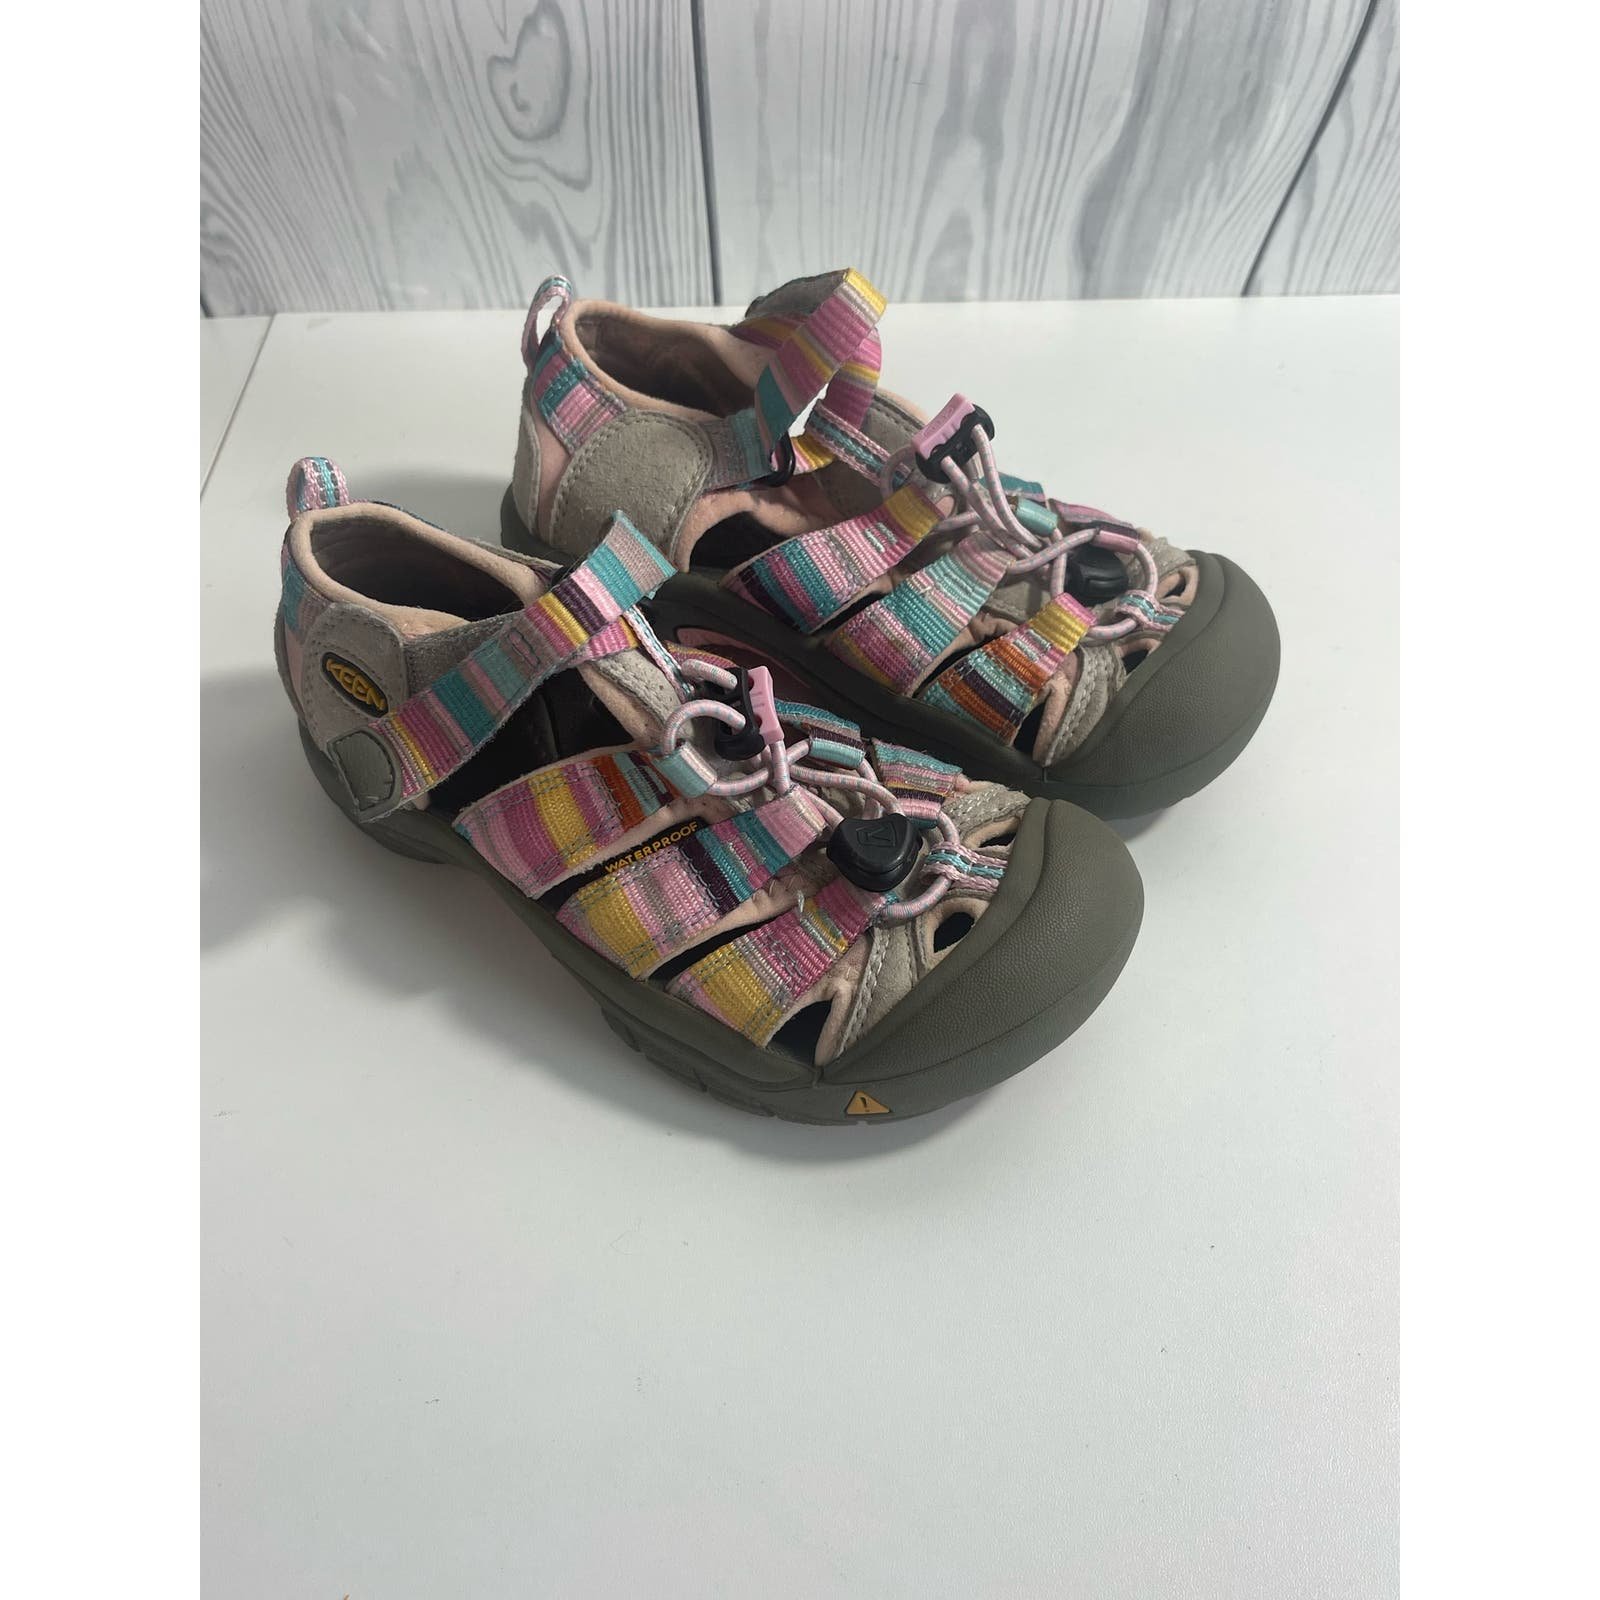 Keen Newport Toddler Size 13 Athletic Pink Purple Stripe Hiking Walking  Sandals dAj2iS5k3